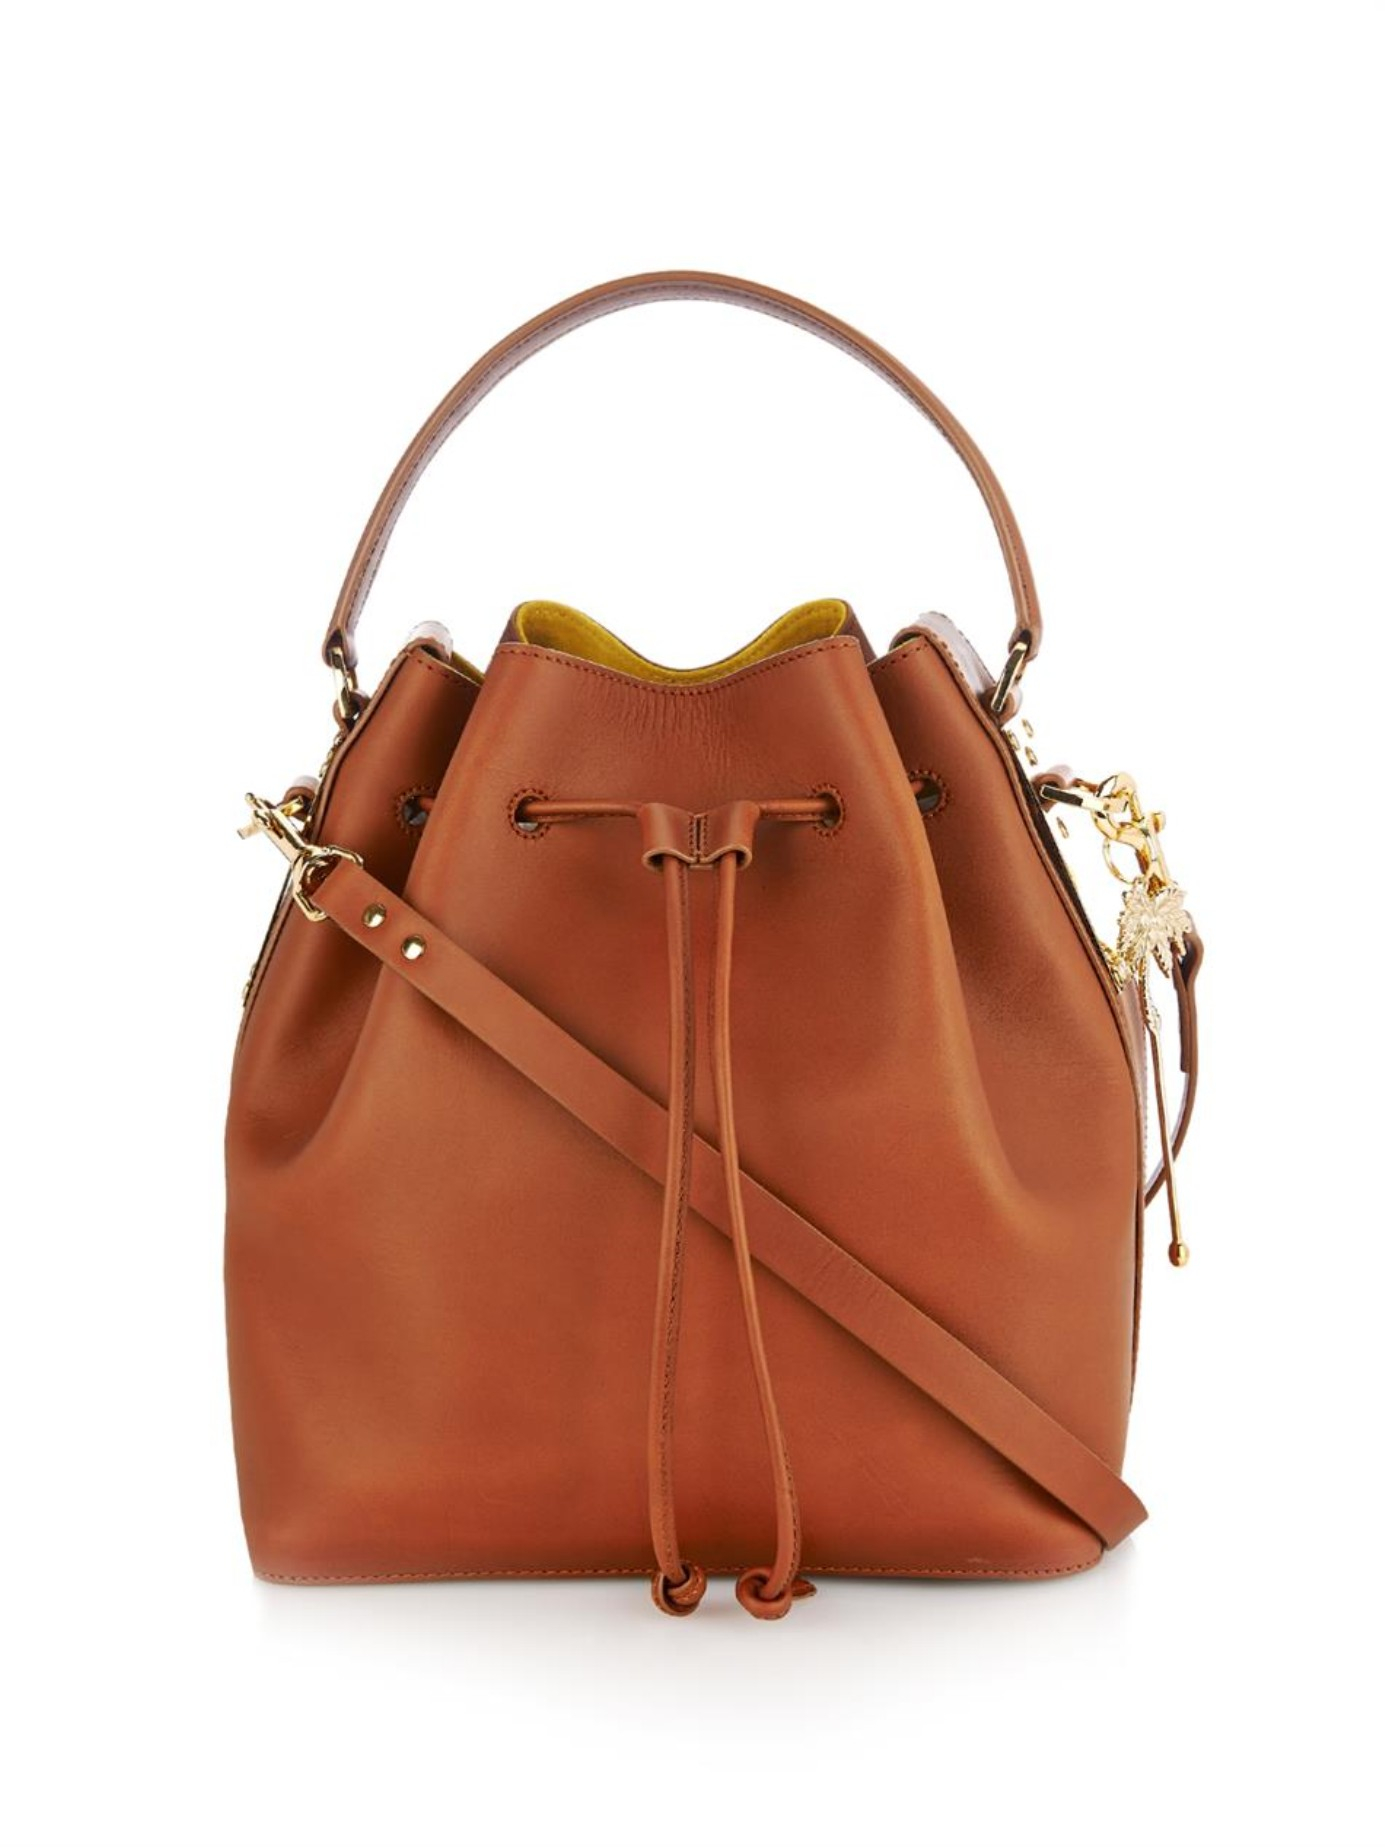 Lyst - Sophie Hulme Drawstring Leather Bucket Bag in Brown